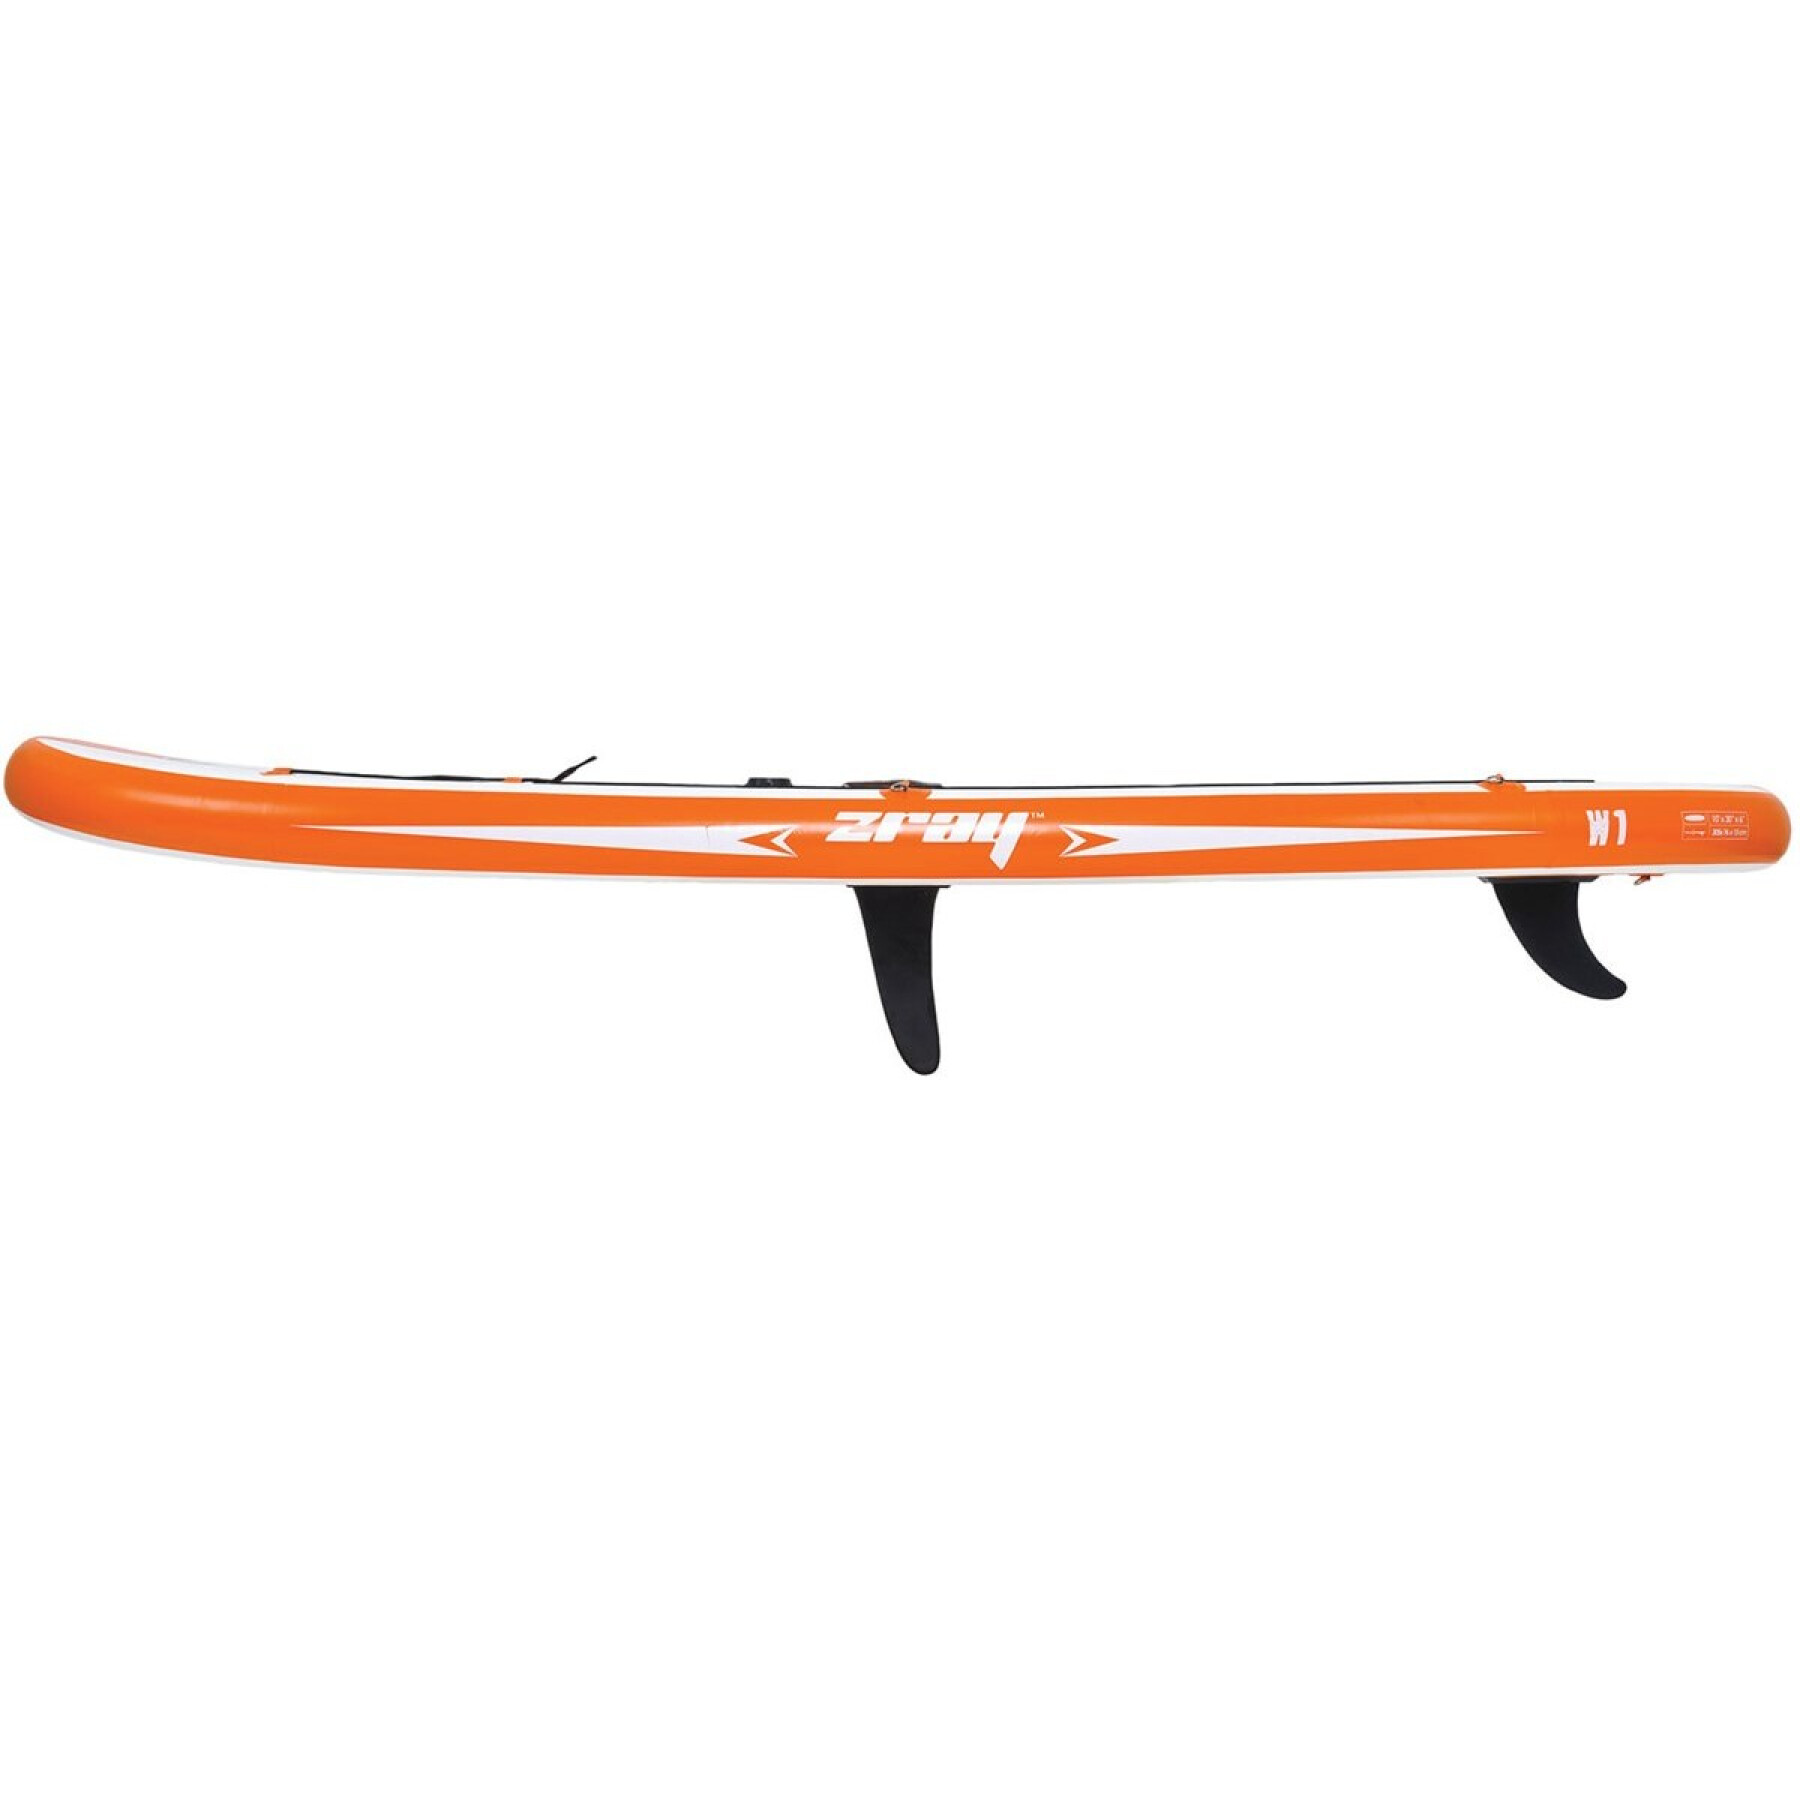 Stand-up paddle hinchable Zray WindSurf 10'